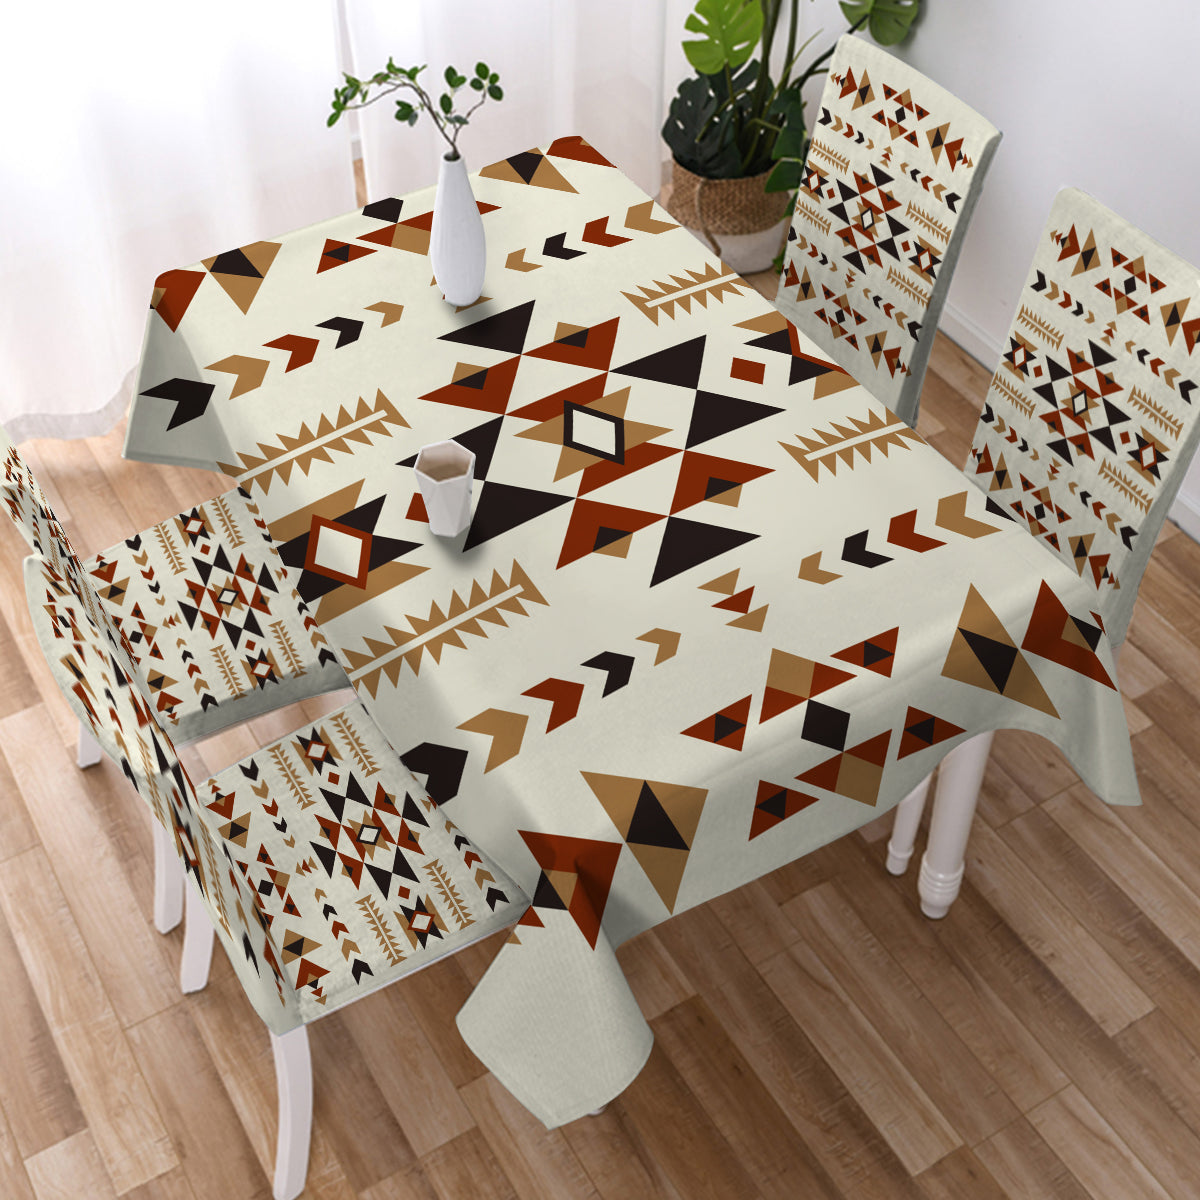 Powwow Store gb nat00514 ethnic pattern design tablecloth